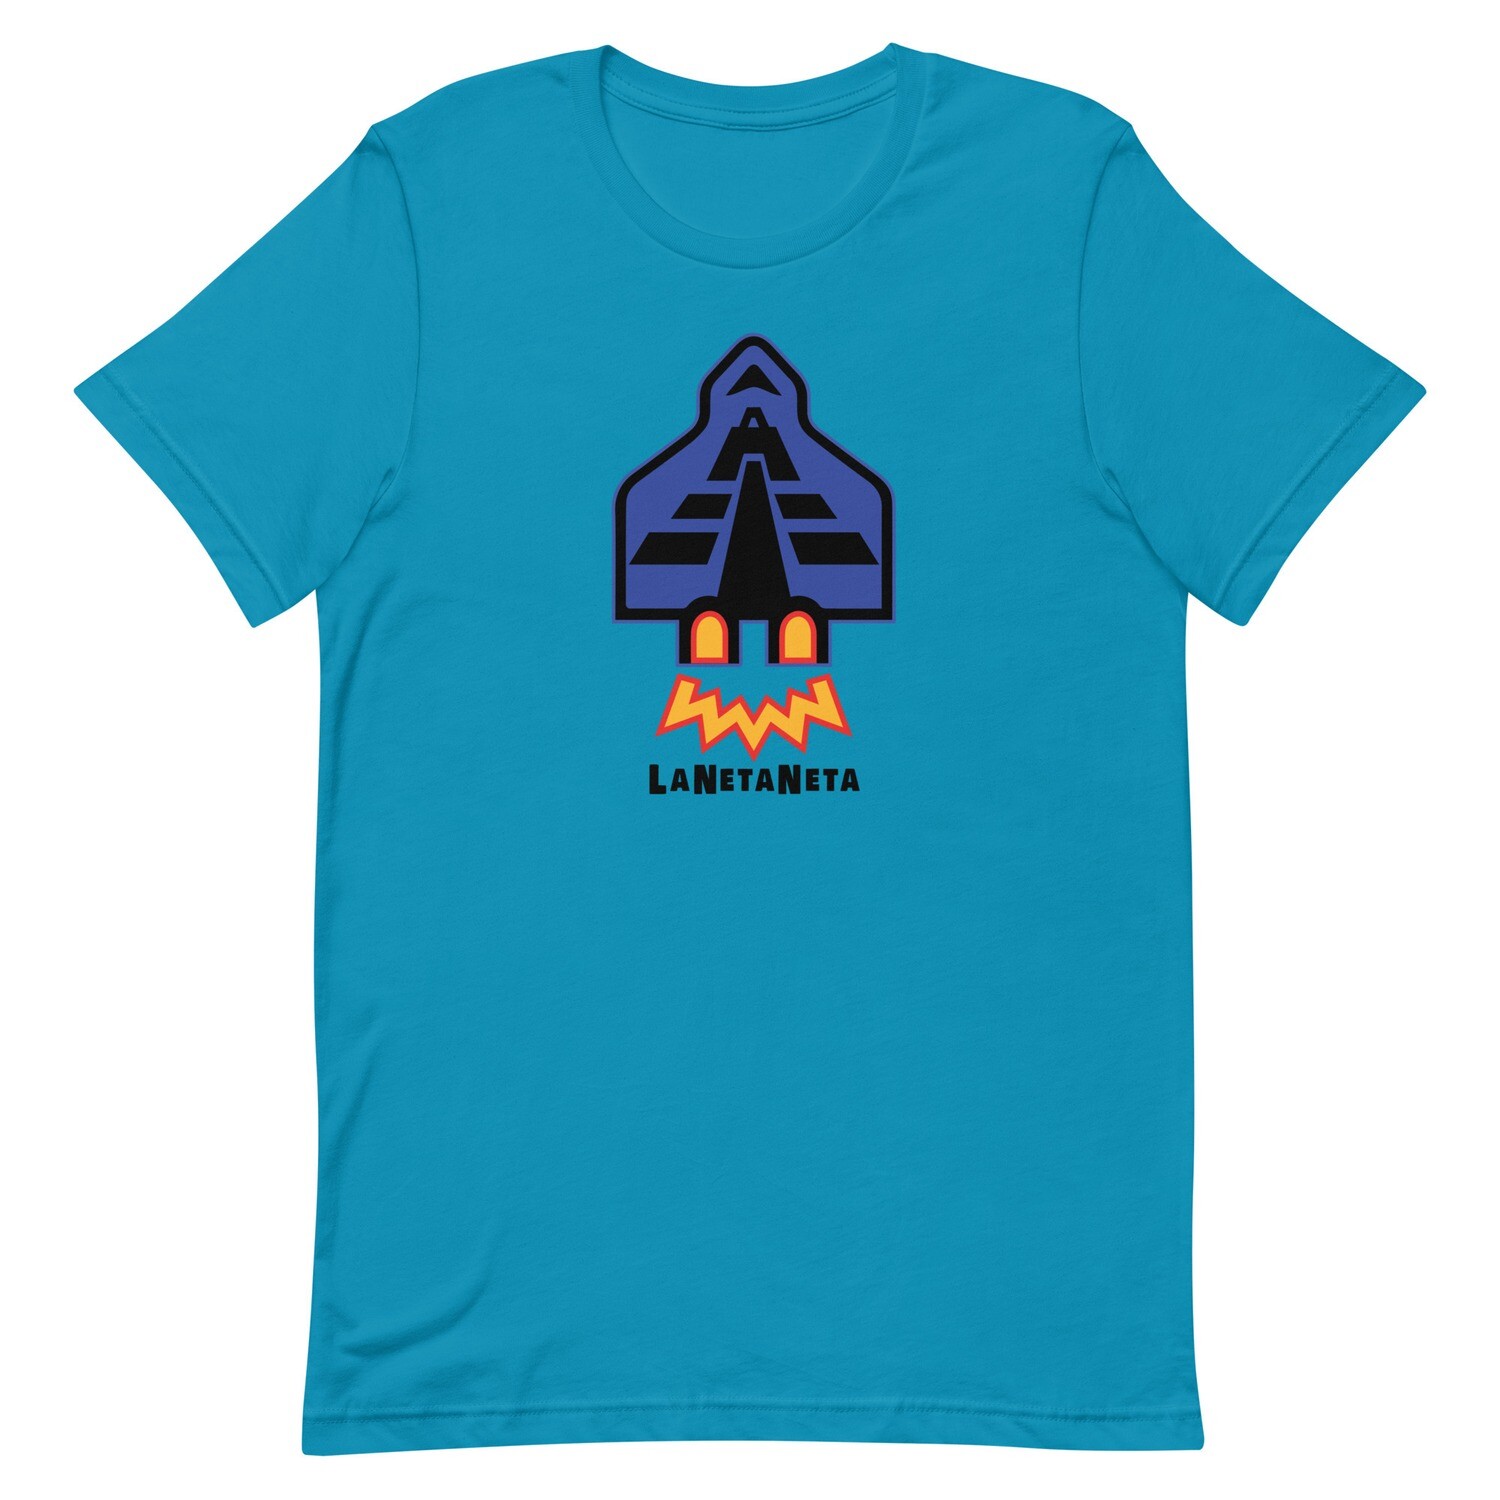 Space Shuttle, LaNetaNeta brand t-shirt